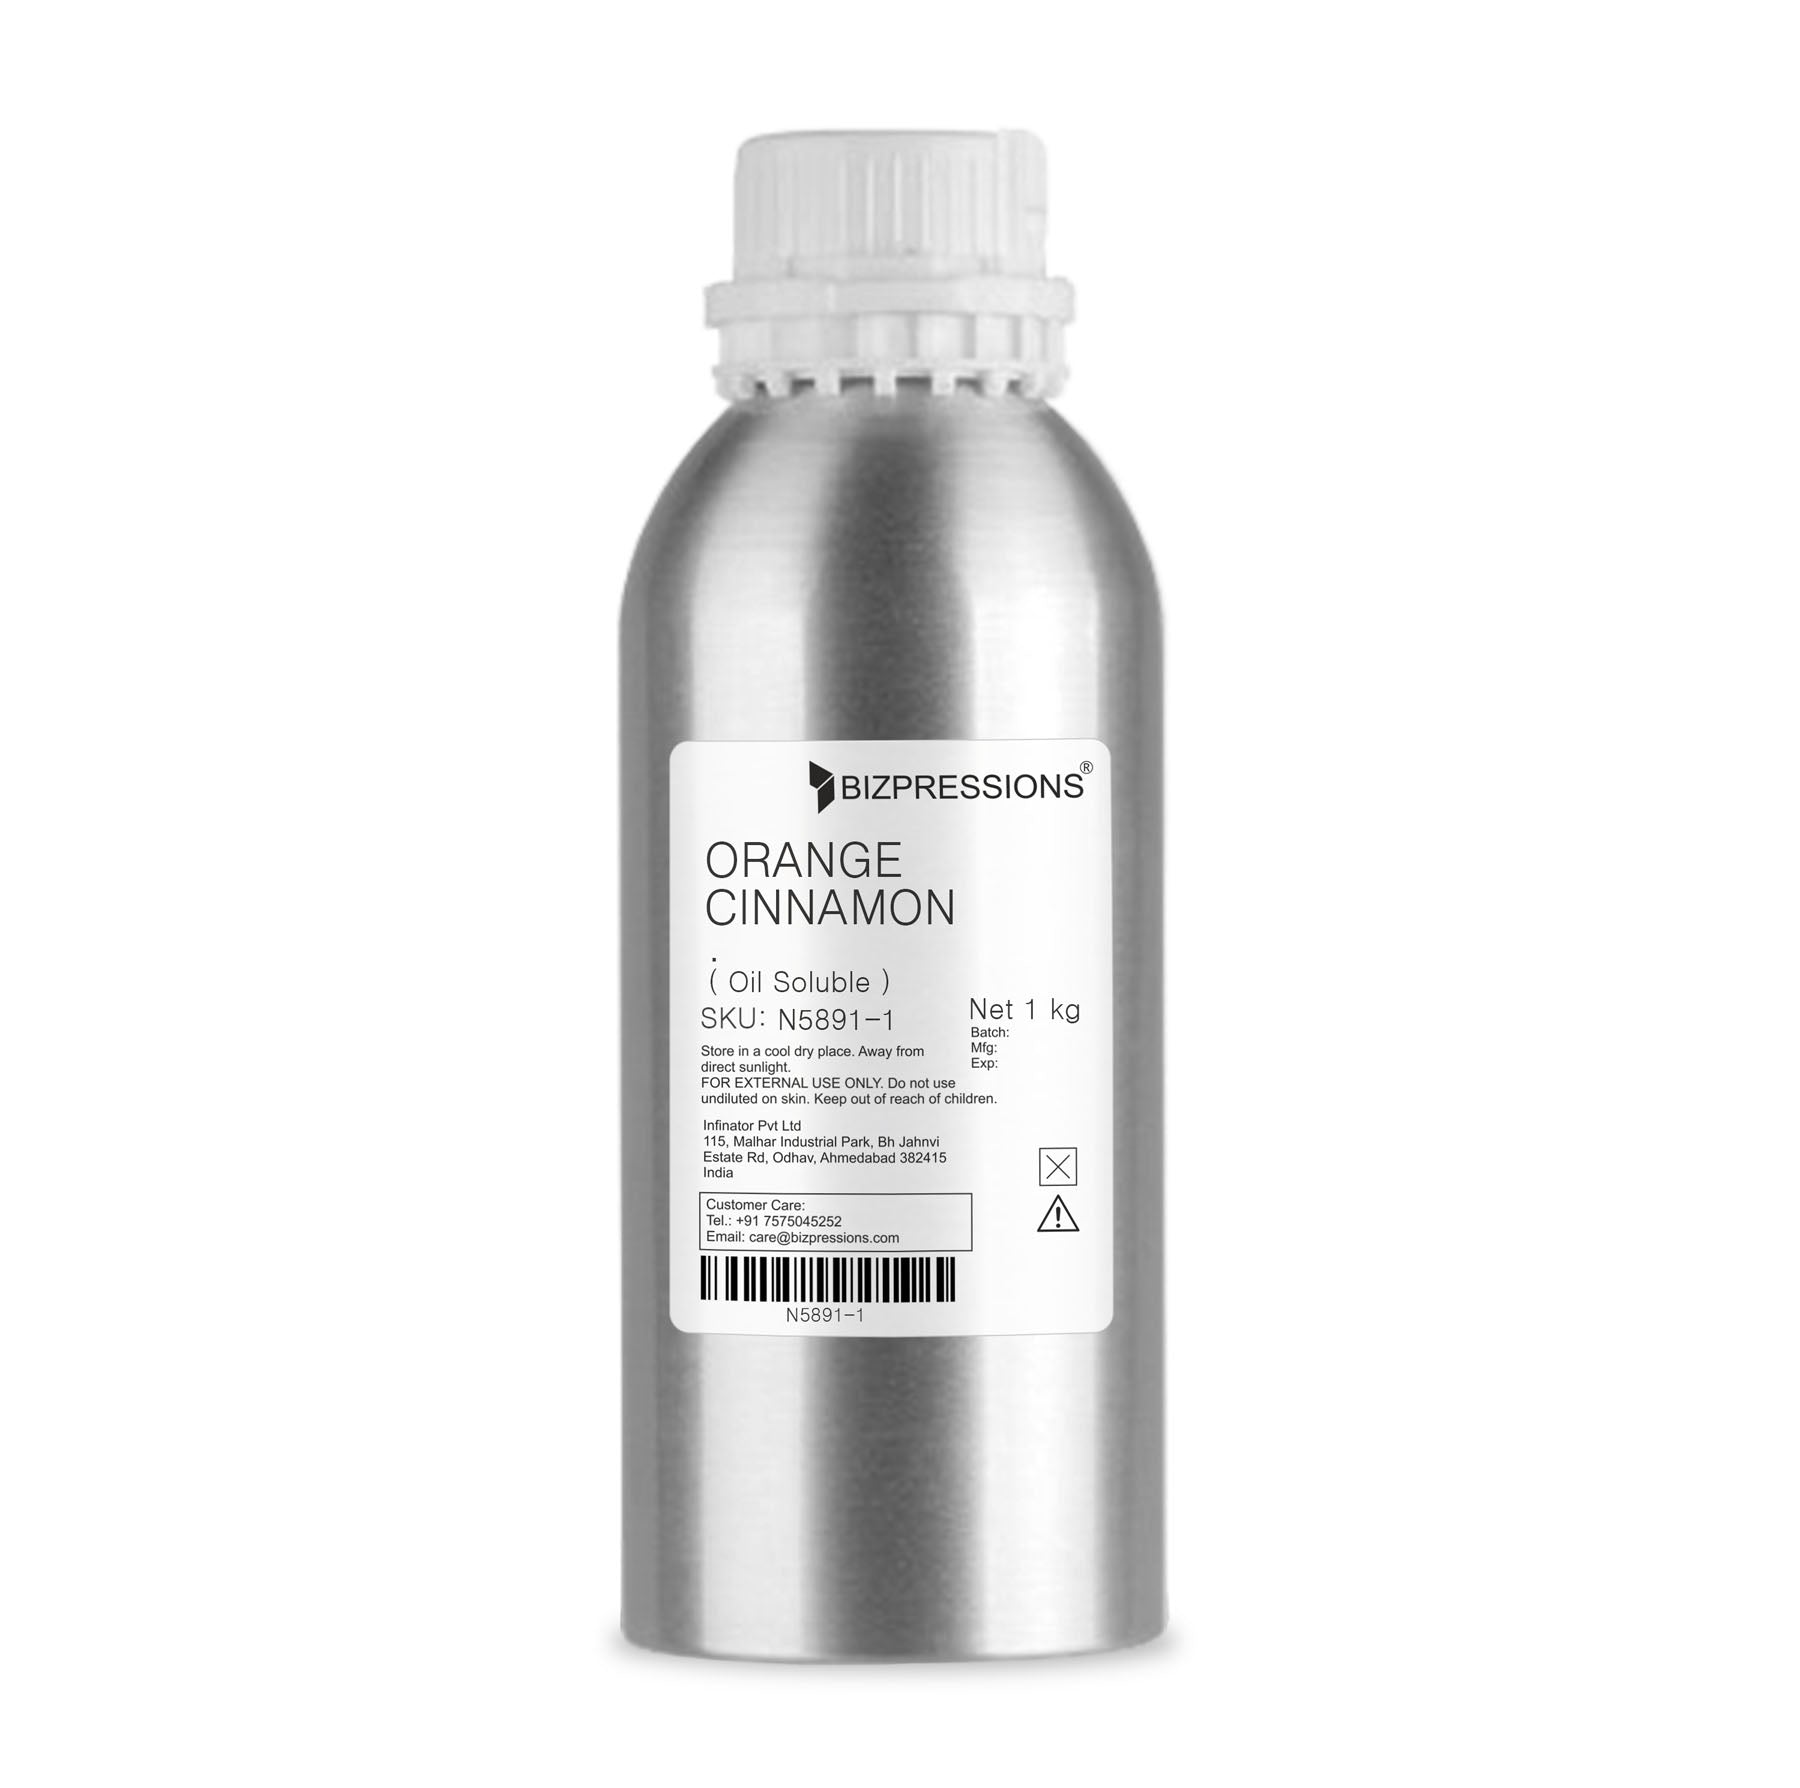 ORANGE CINNAMON - Fragrance ( Oil Soluble ) - 1 kg